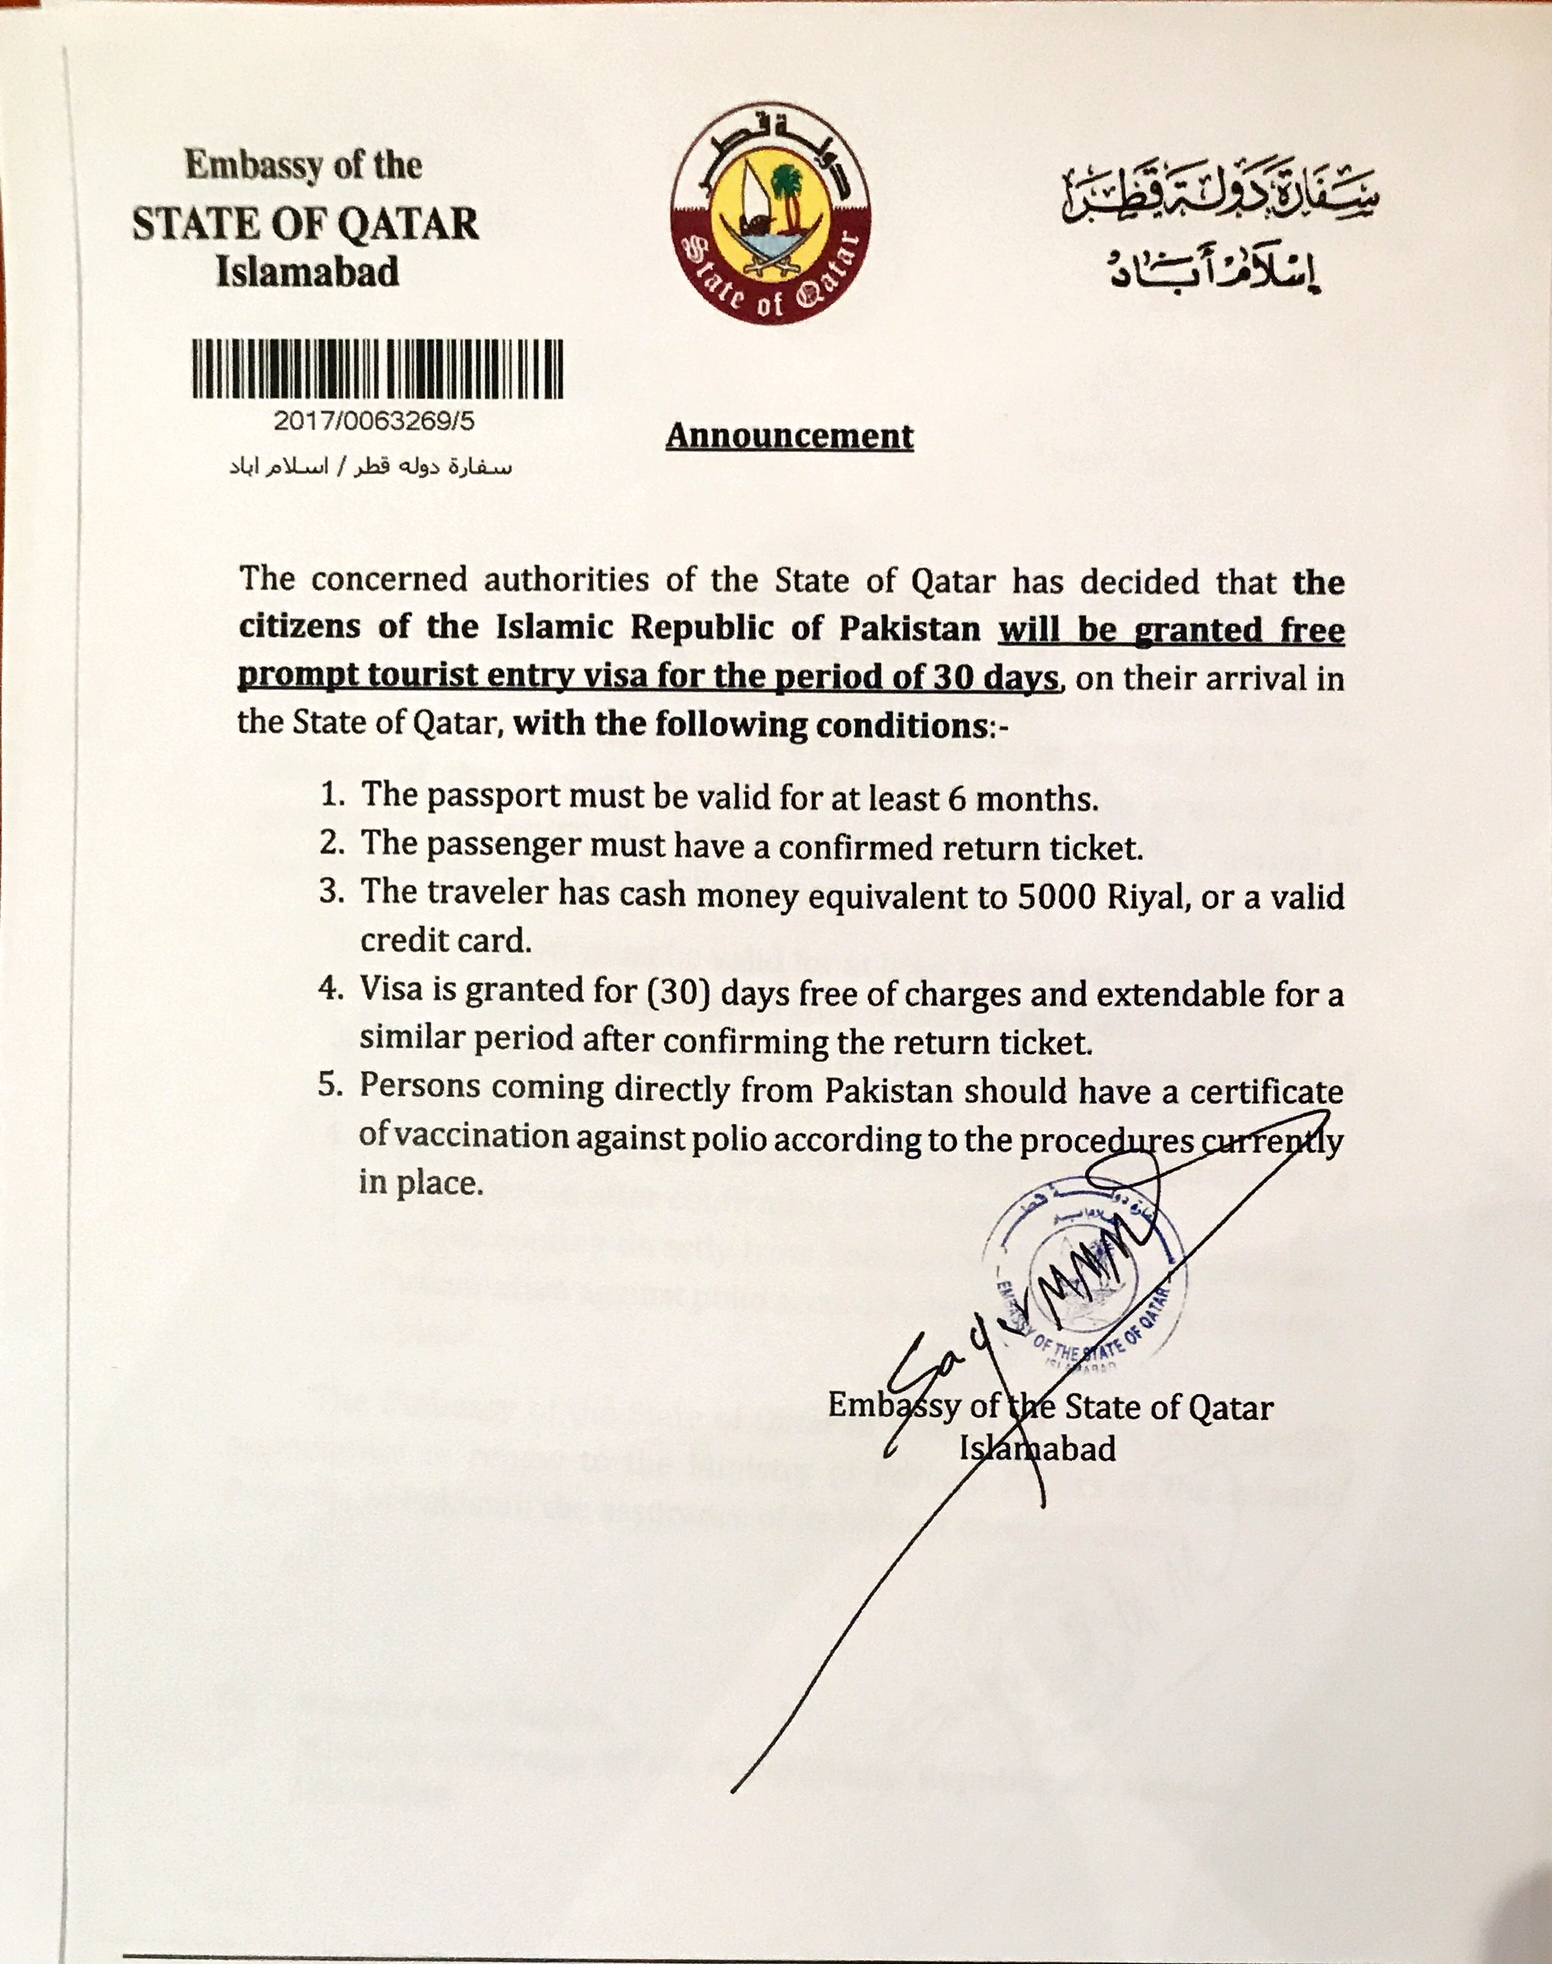 qatar visit visa requirements for pakistani